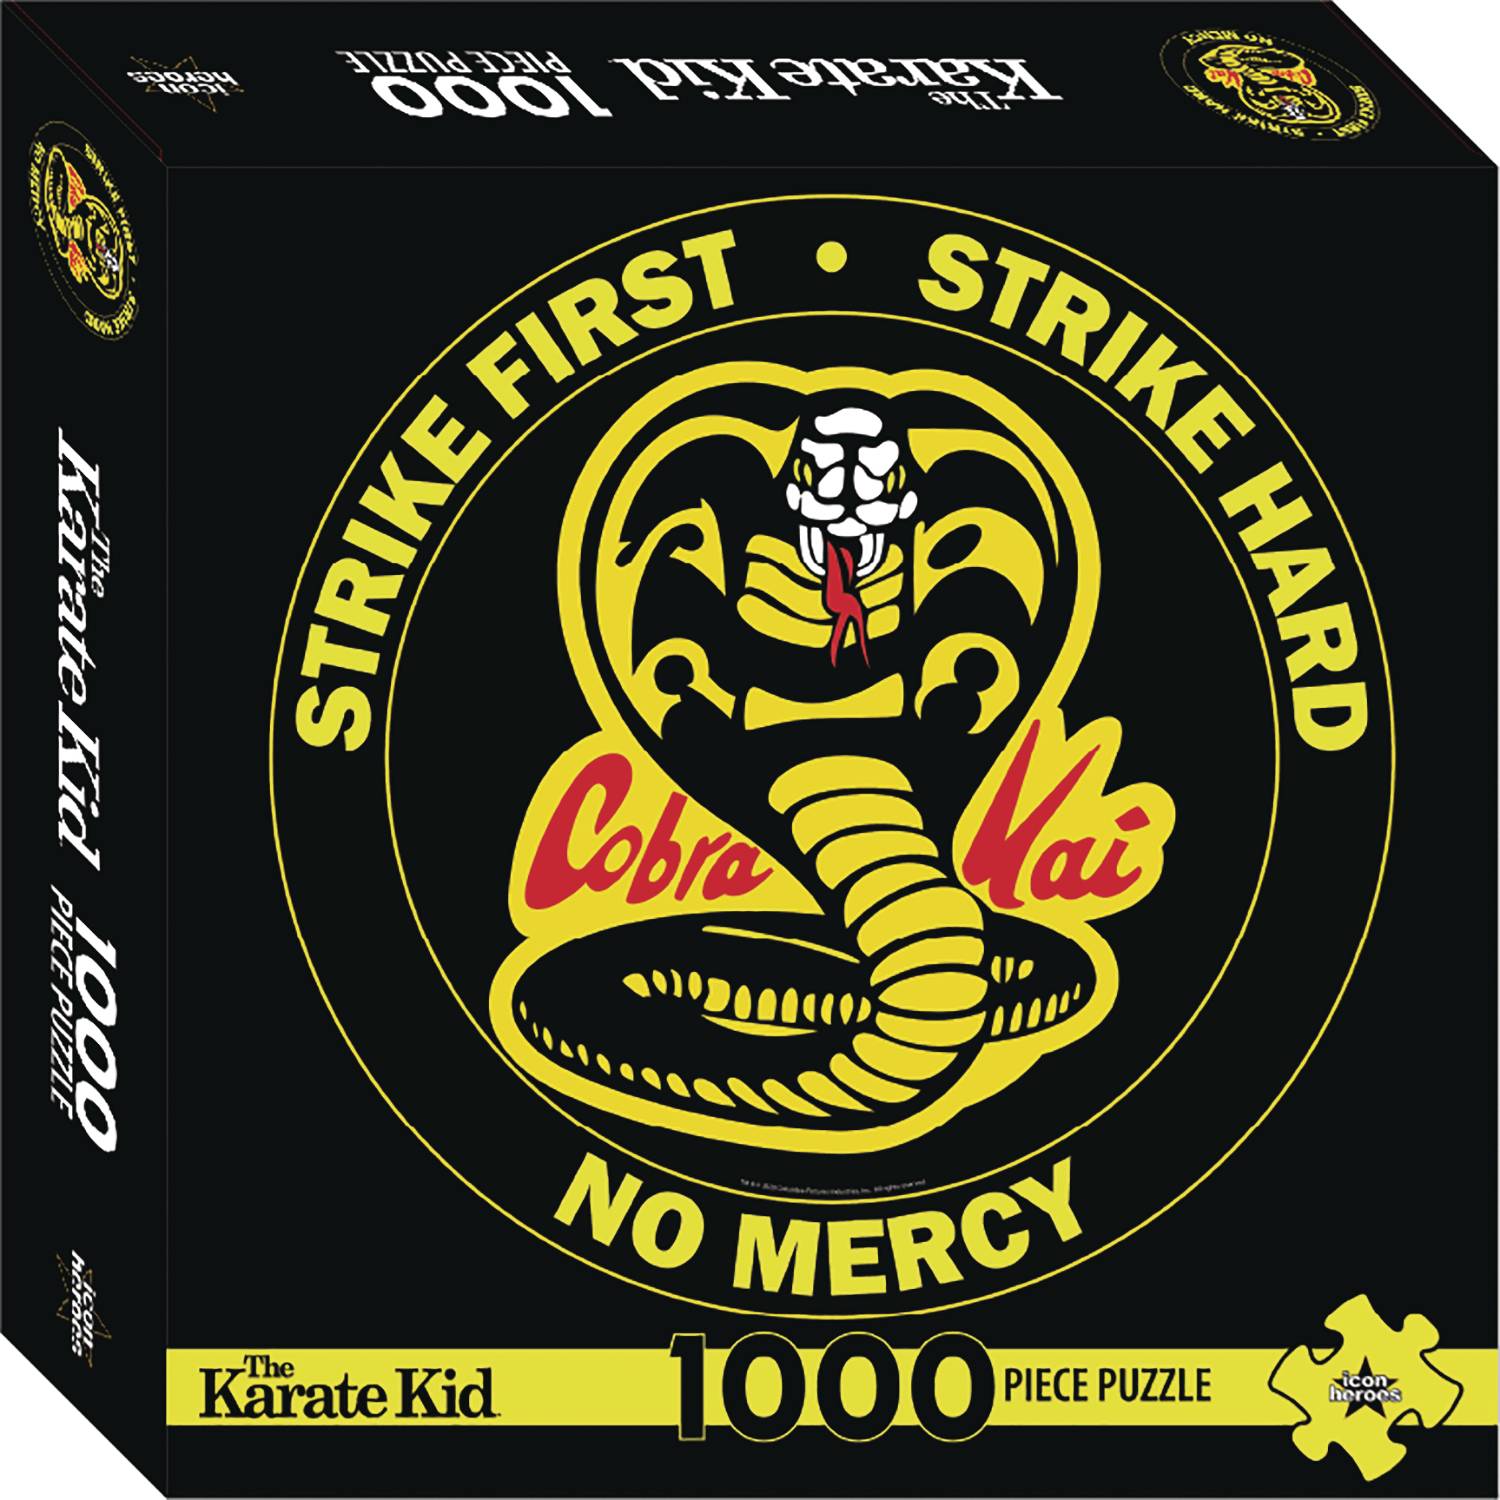 Cobra Kai Logo Type (Karate Kid) Strike Hard Strike First No Mercy Diecut  MAGNET | eBay